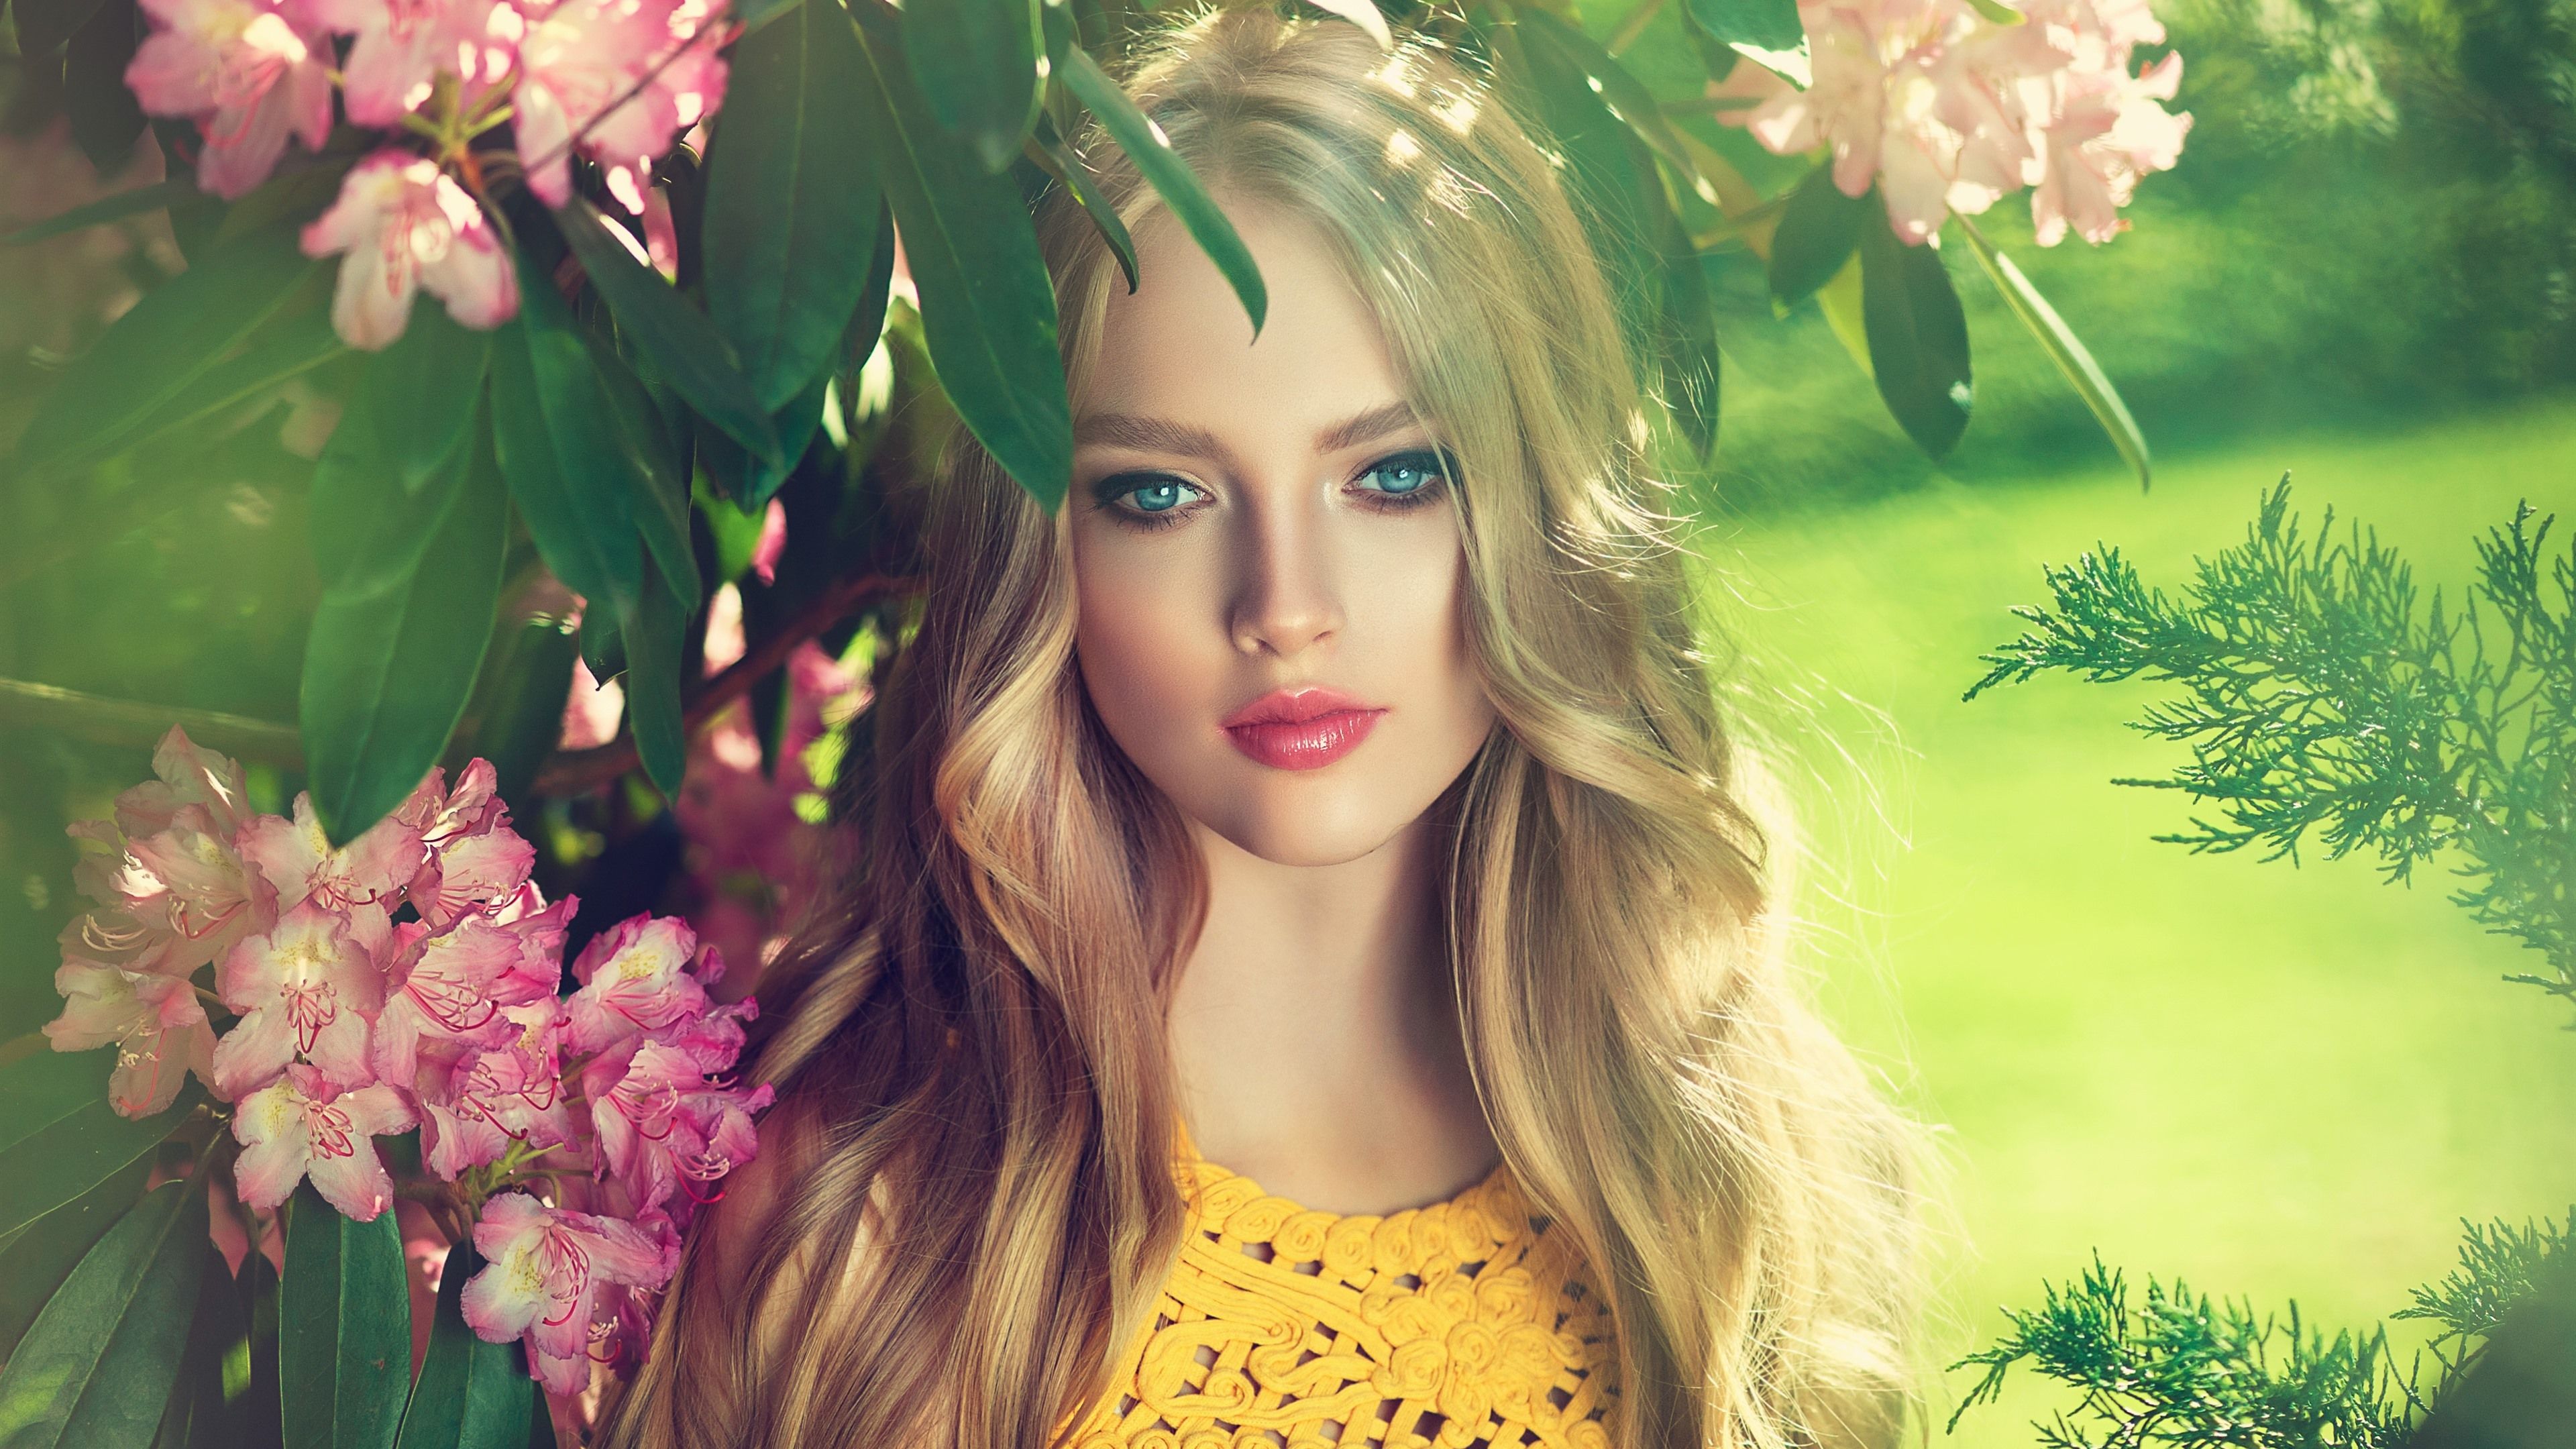 Wallpaper Beautiful blonde girl, blue eyes, pink flowers 3840x2160 UHD 4K Picture, Image